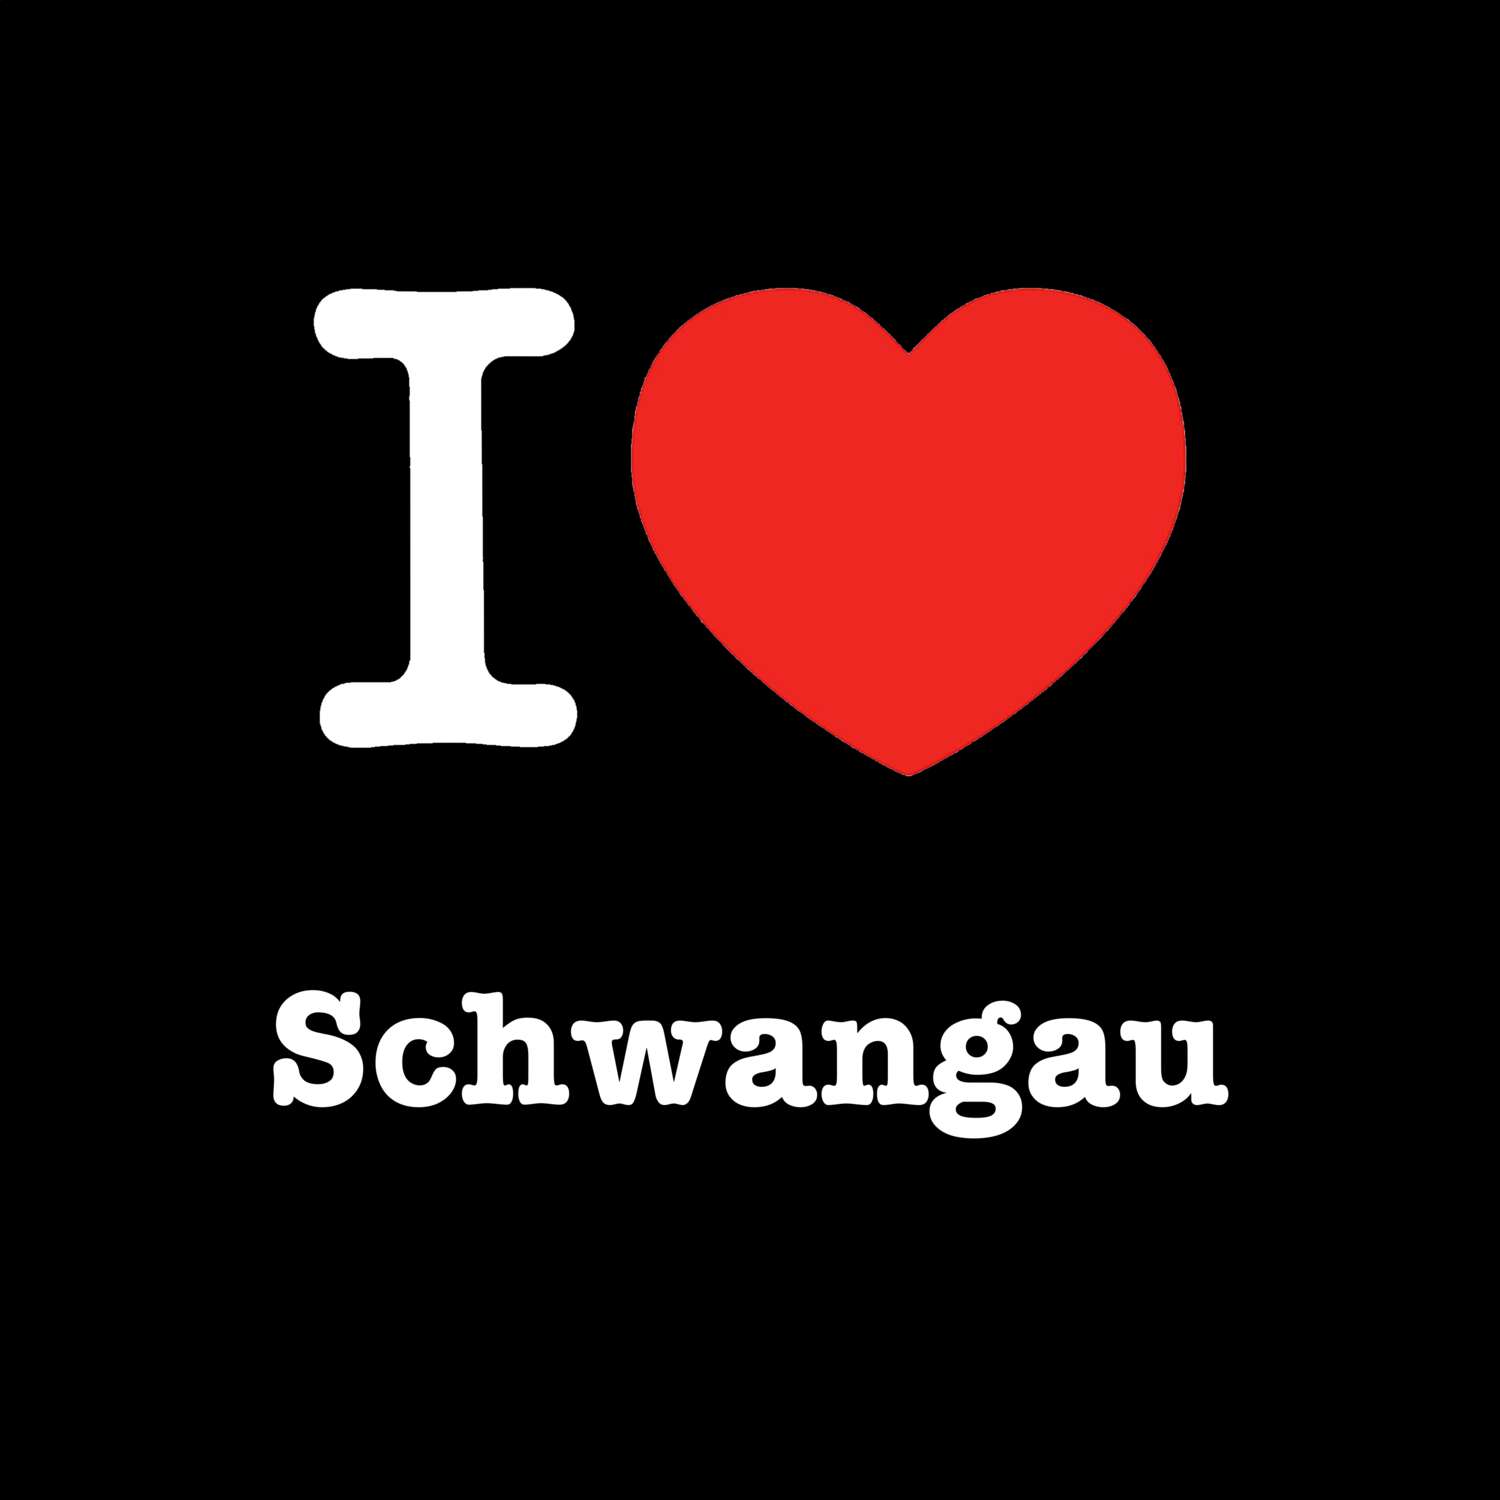 Schwangau T-Shirt »I love«